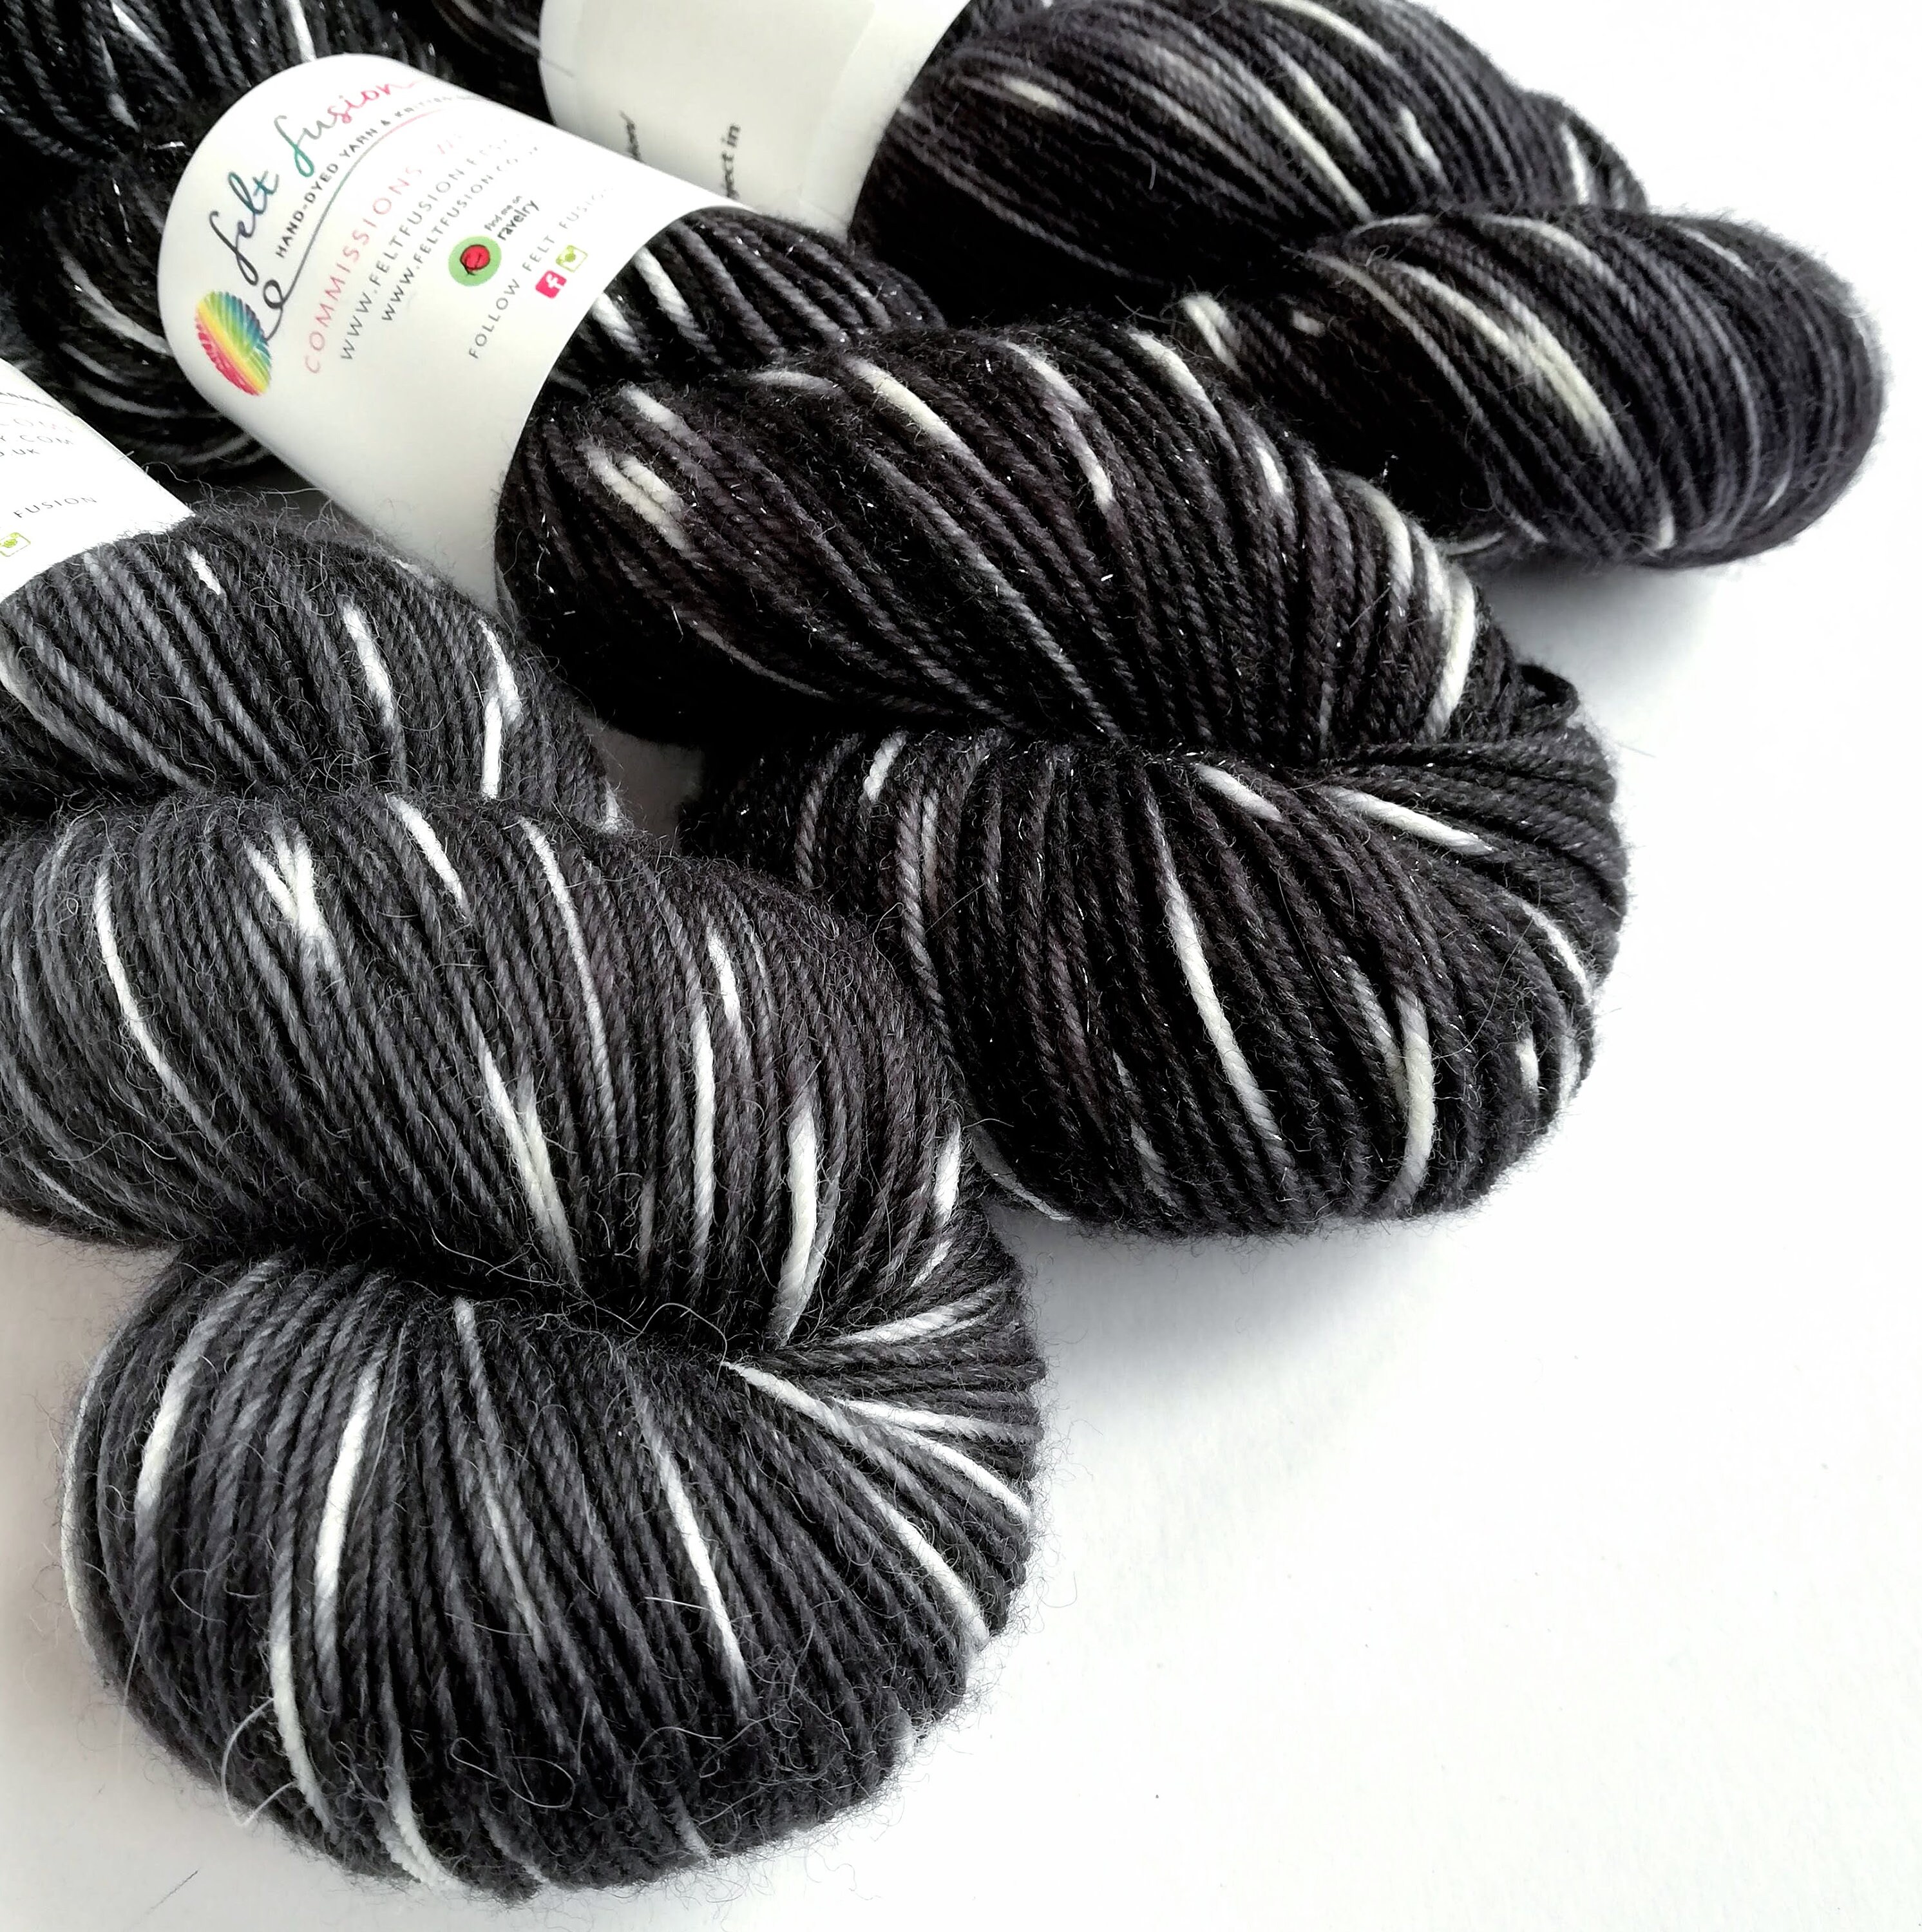 Hand Dyed Yarn. Black and White Variegated Colourway on Sparkle Dk Yarn.  Black With White Dk Yarn, Warp Speed Monochrome Yarn. -  UK